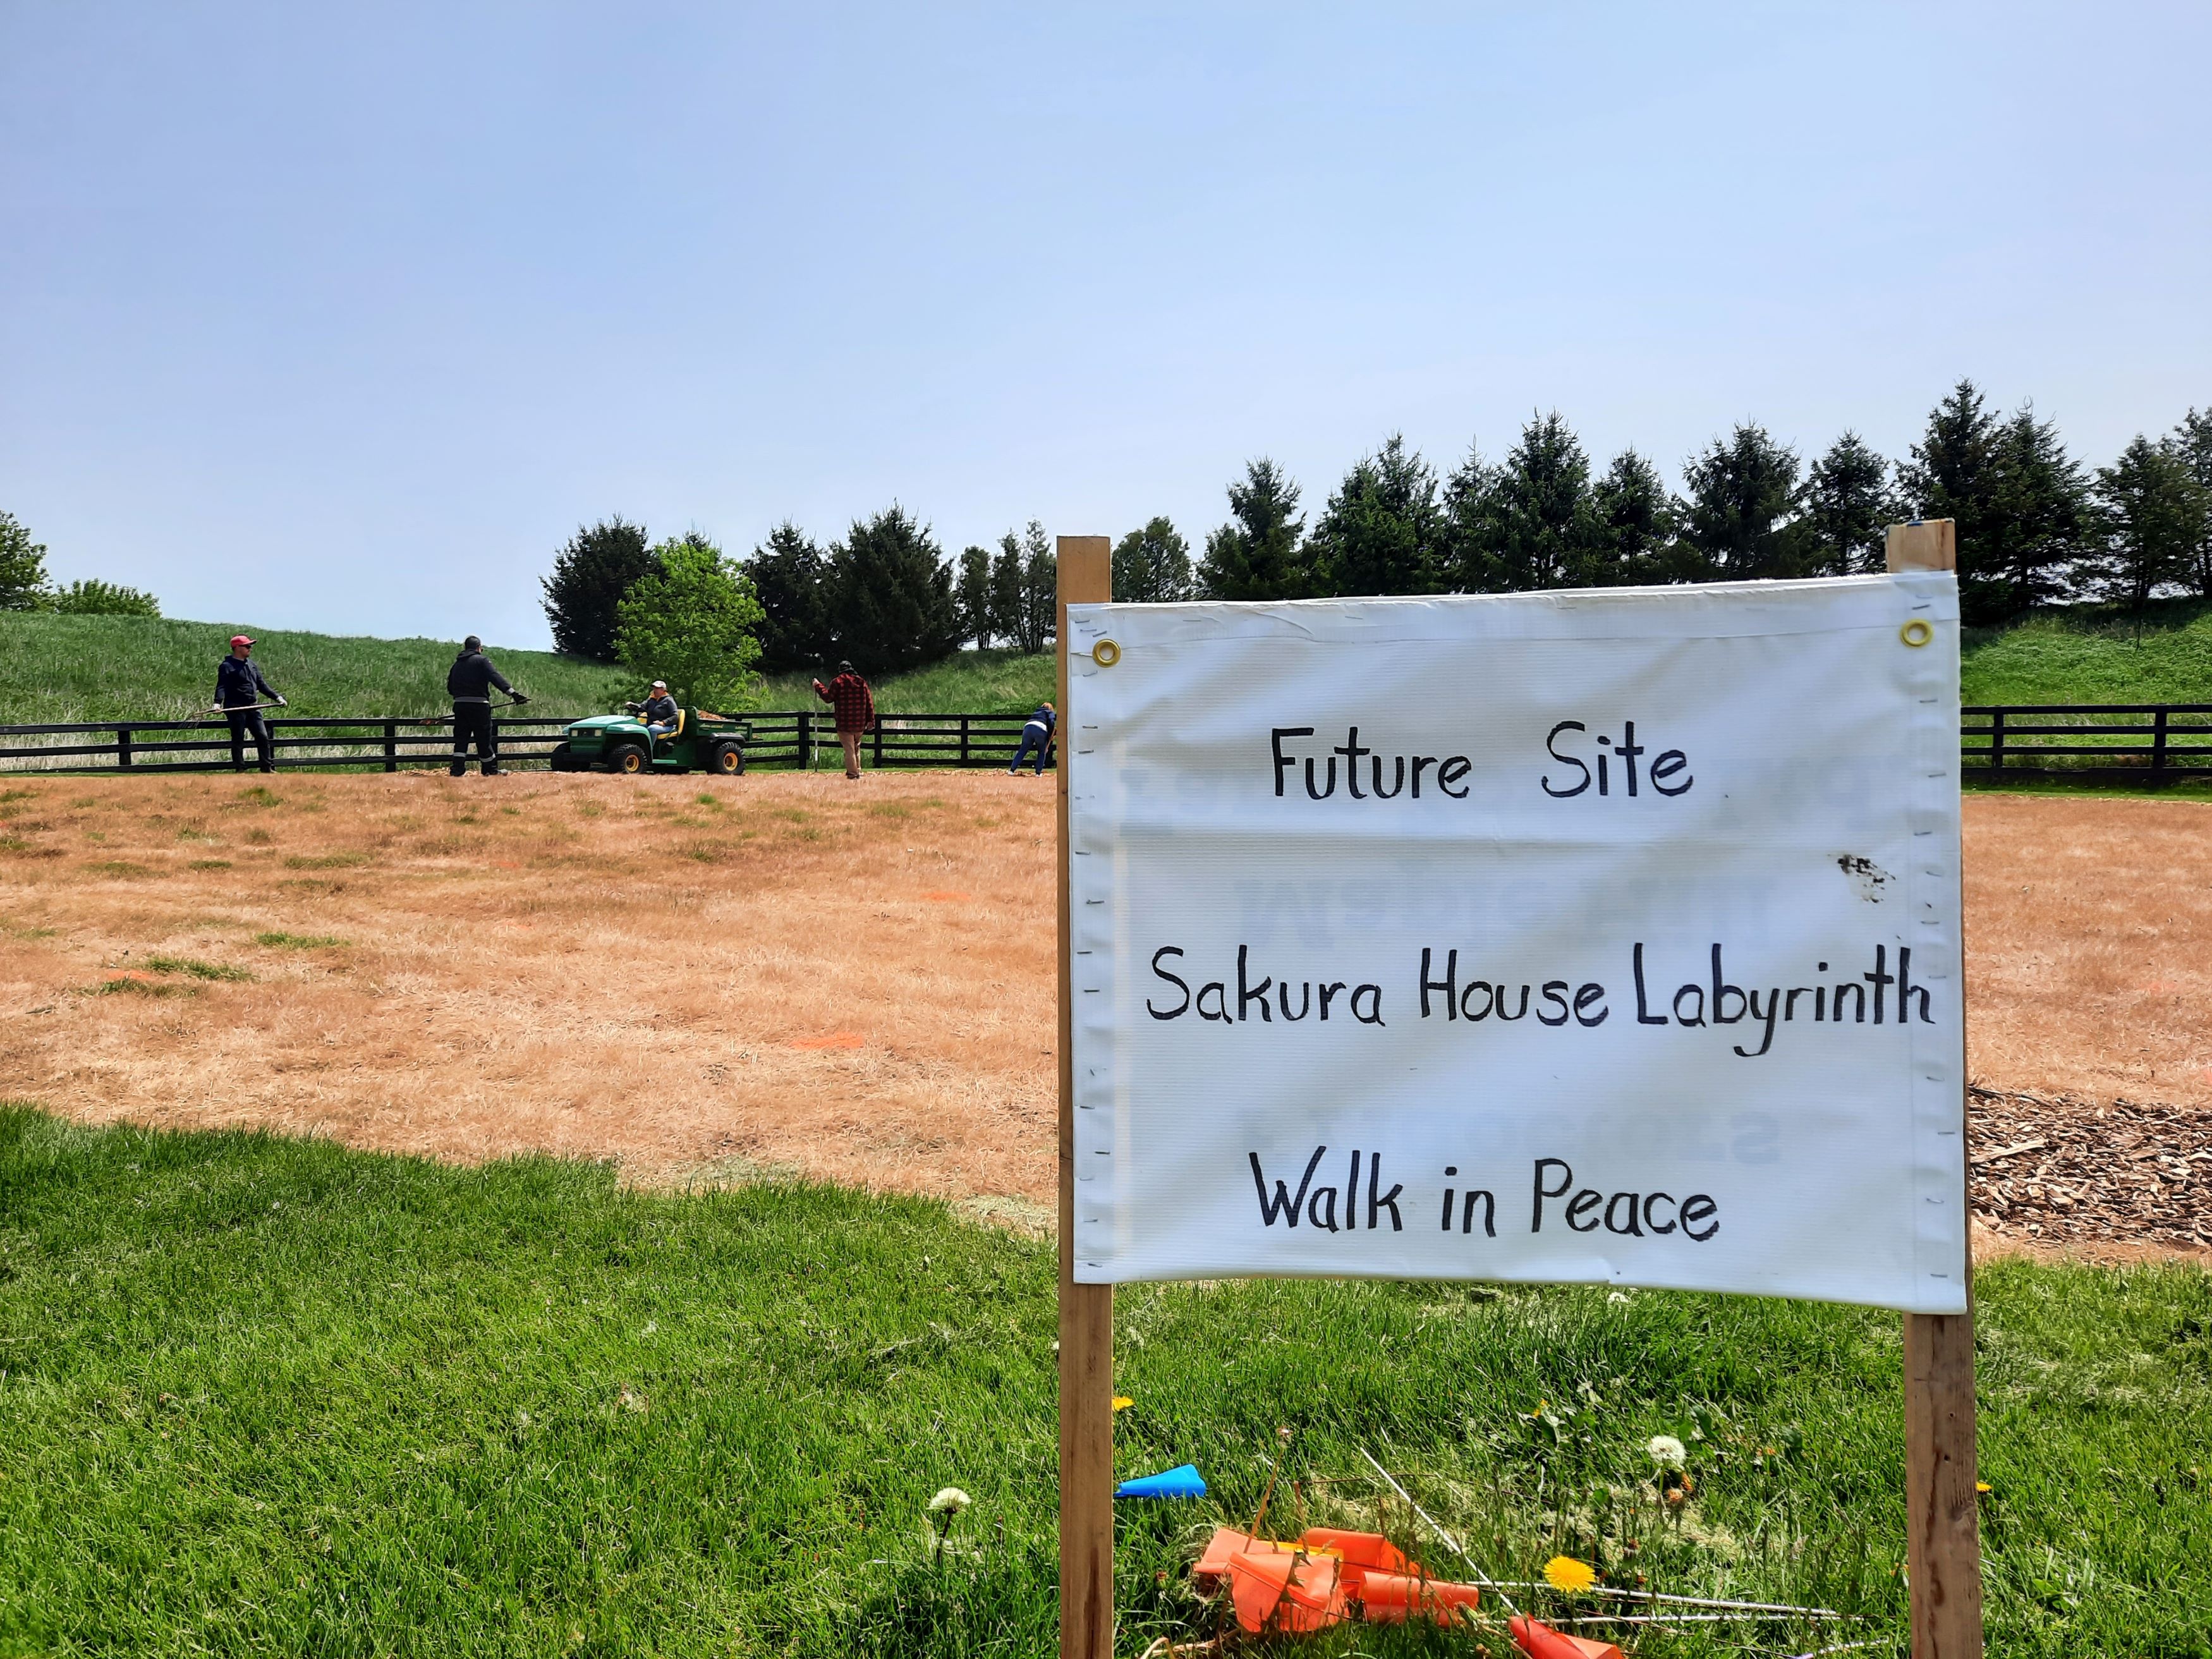 Coming Soon - the Sakura House Labyrinth!